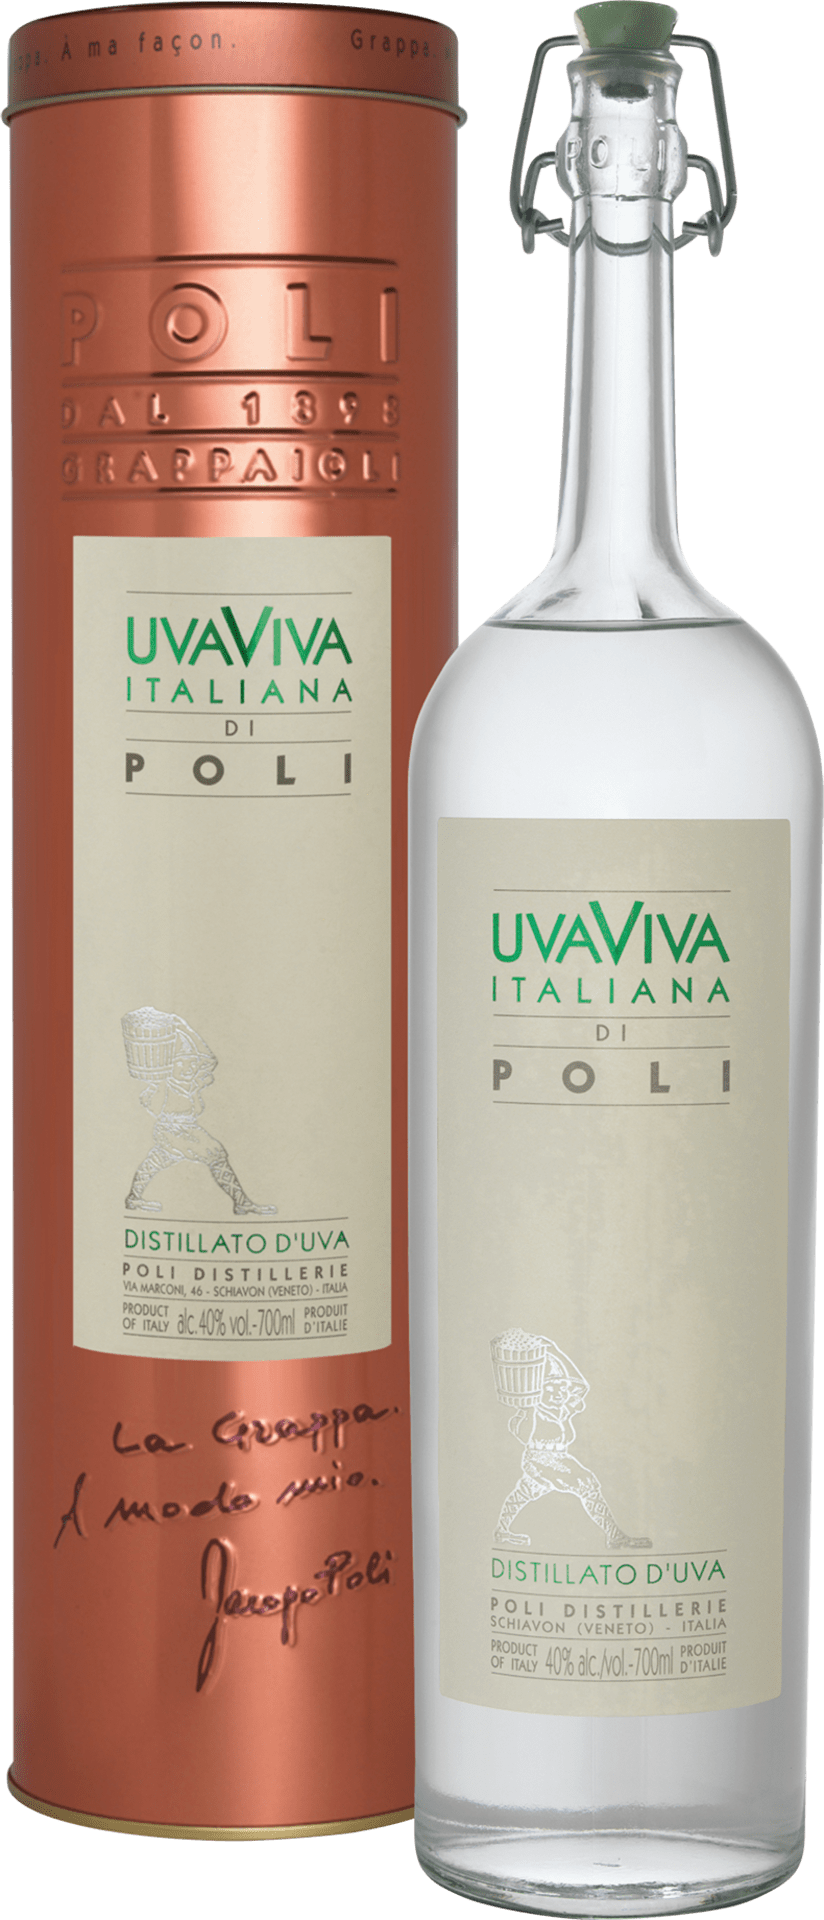 UvaViva Italiana di Poli